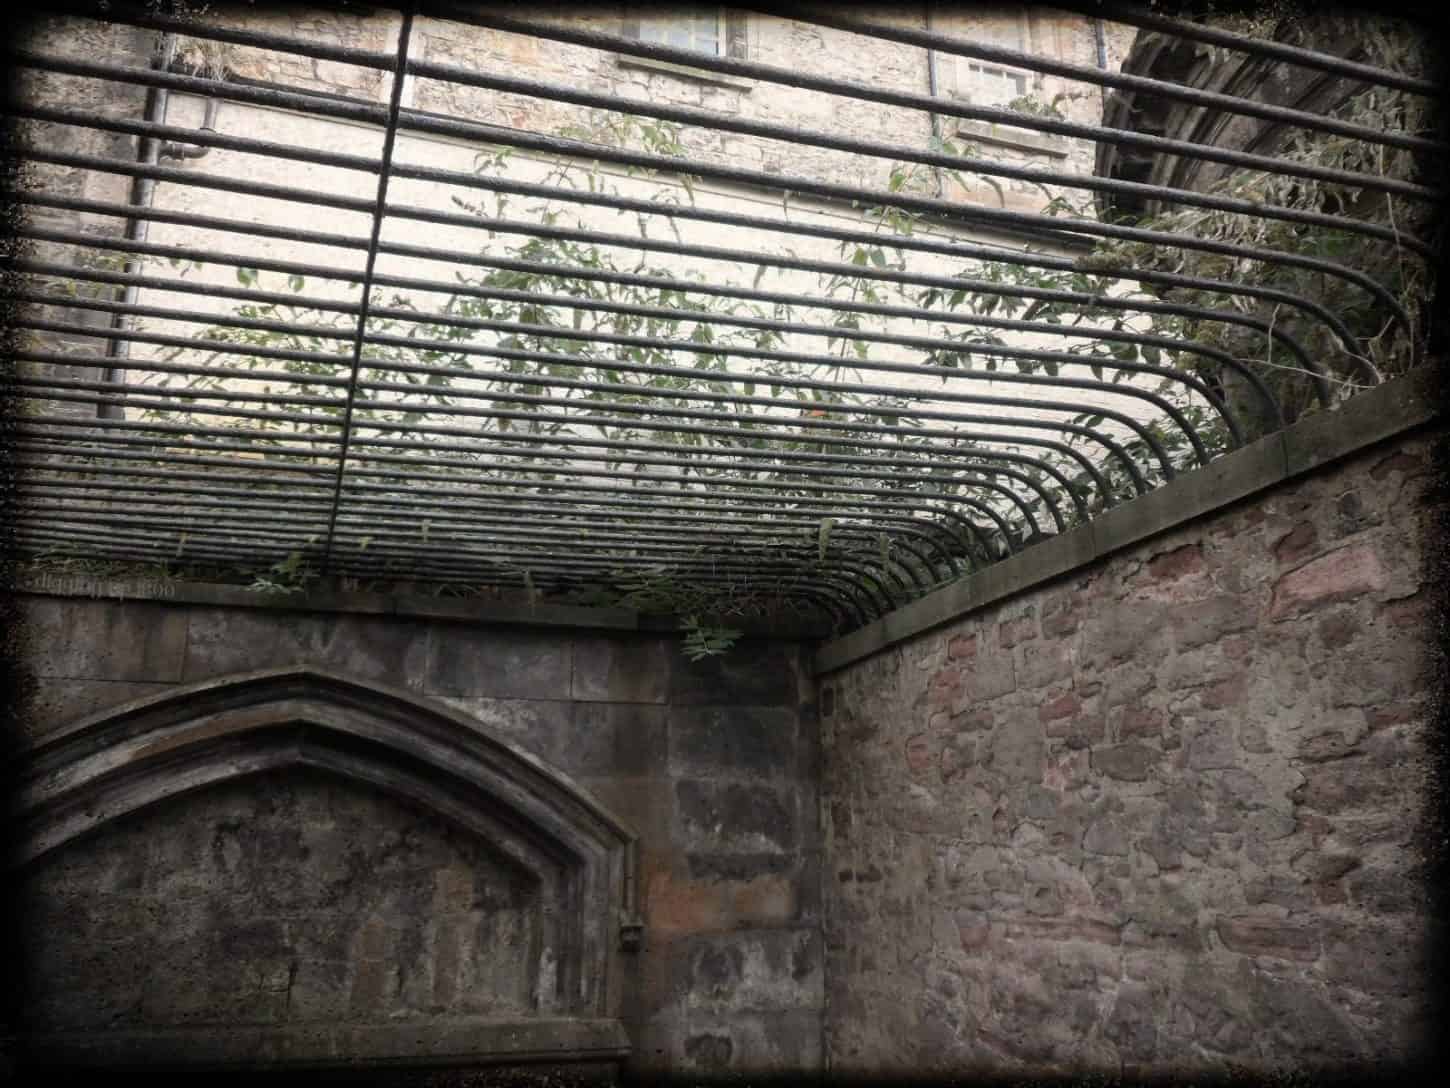 Caged lair designed to prevent body snatching. Edinburgh Greyfriars Kirkyard, Scotland 